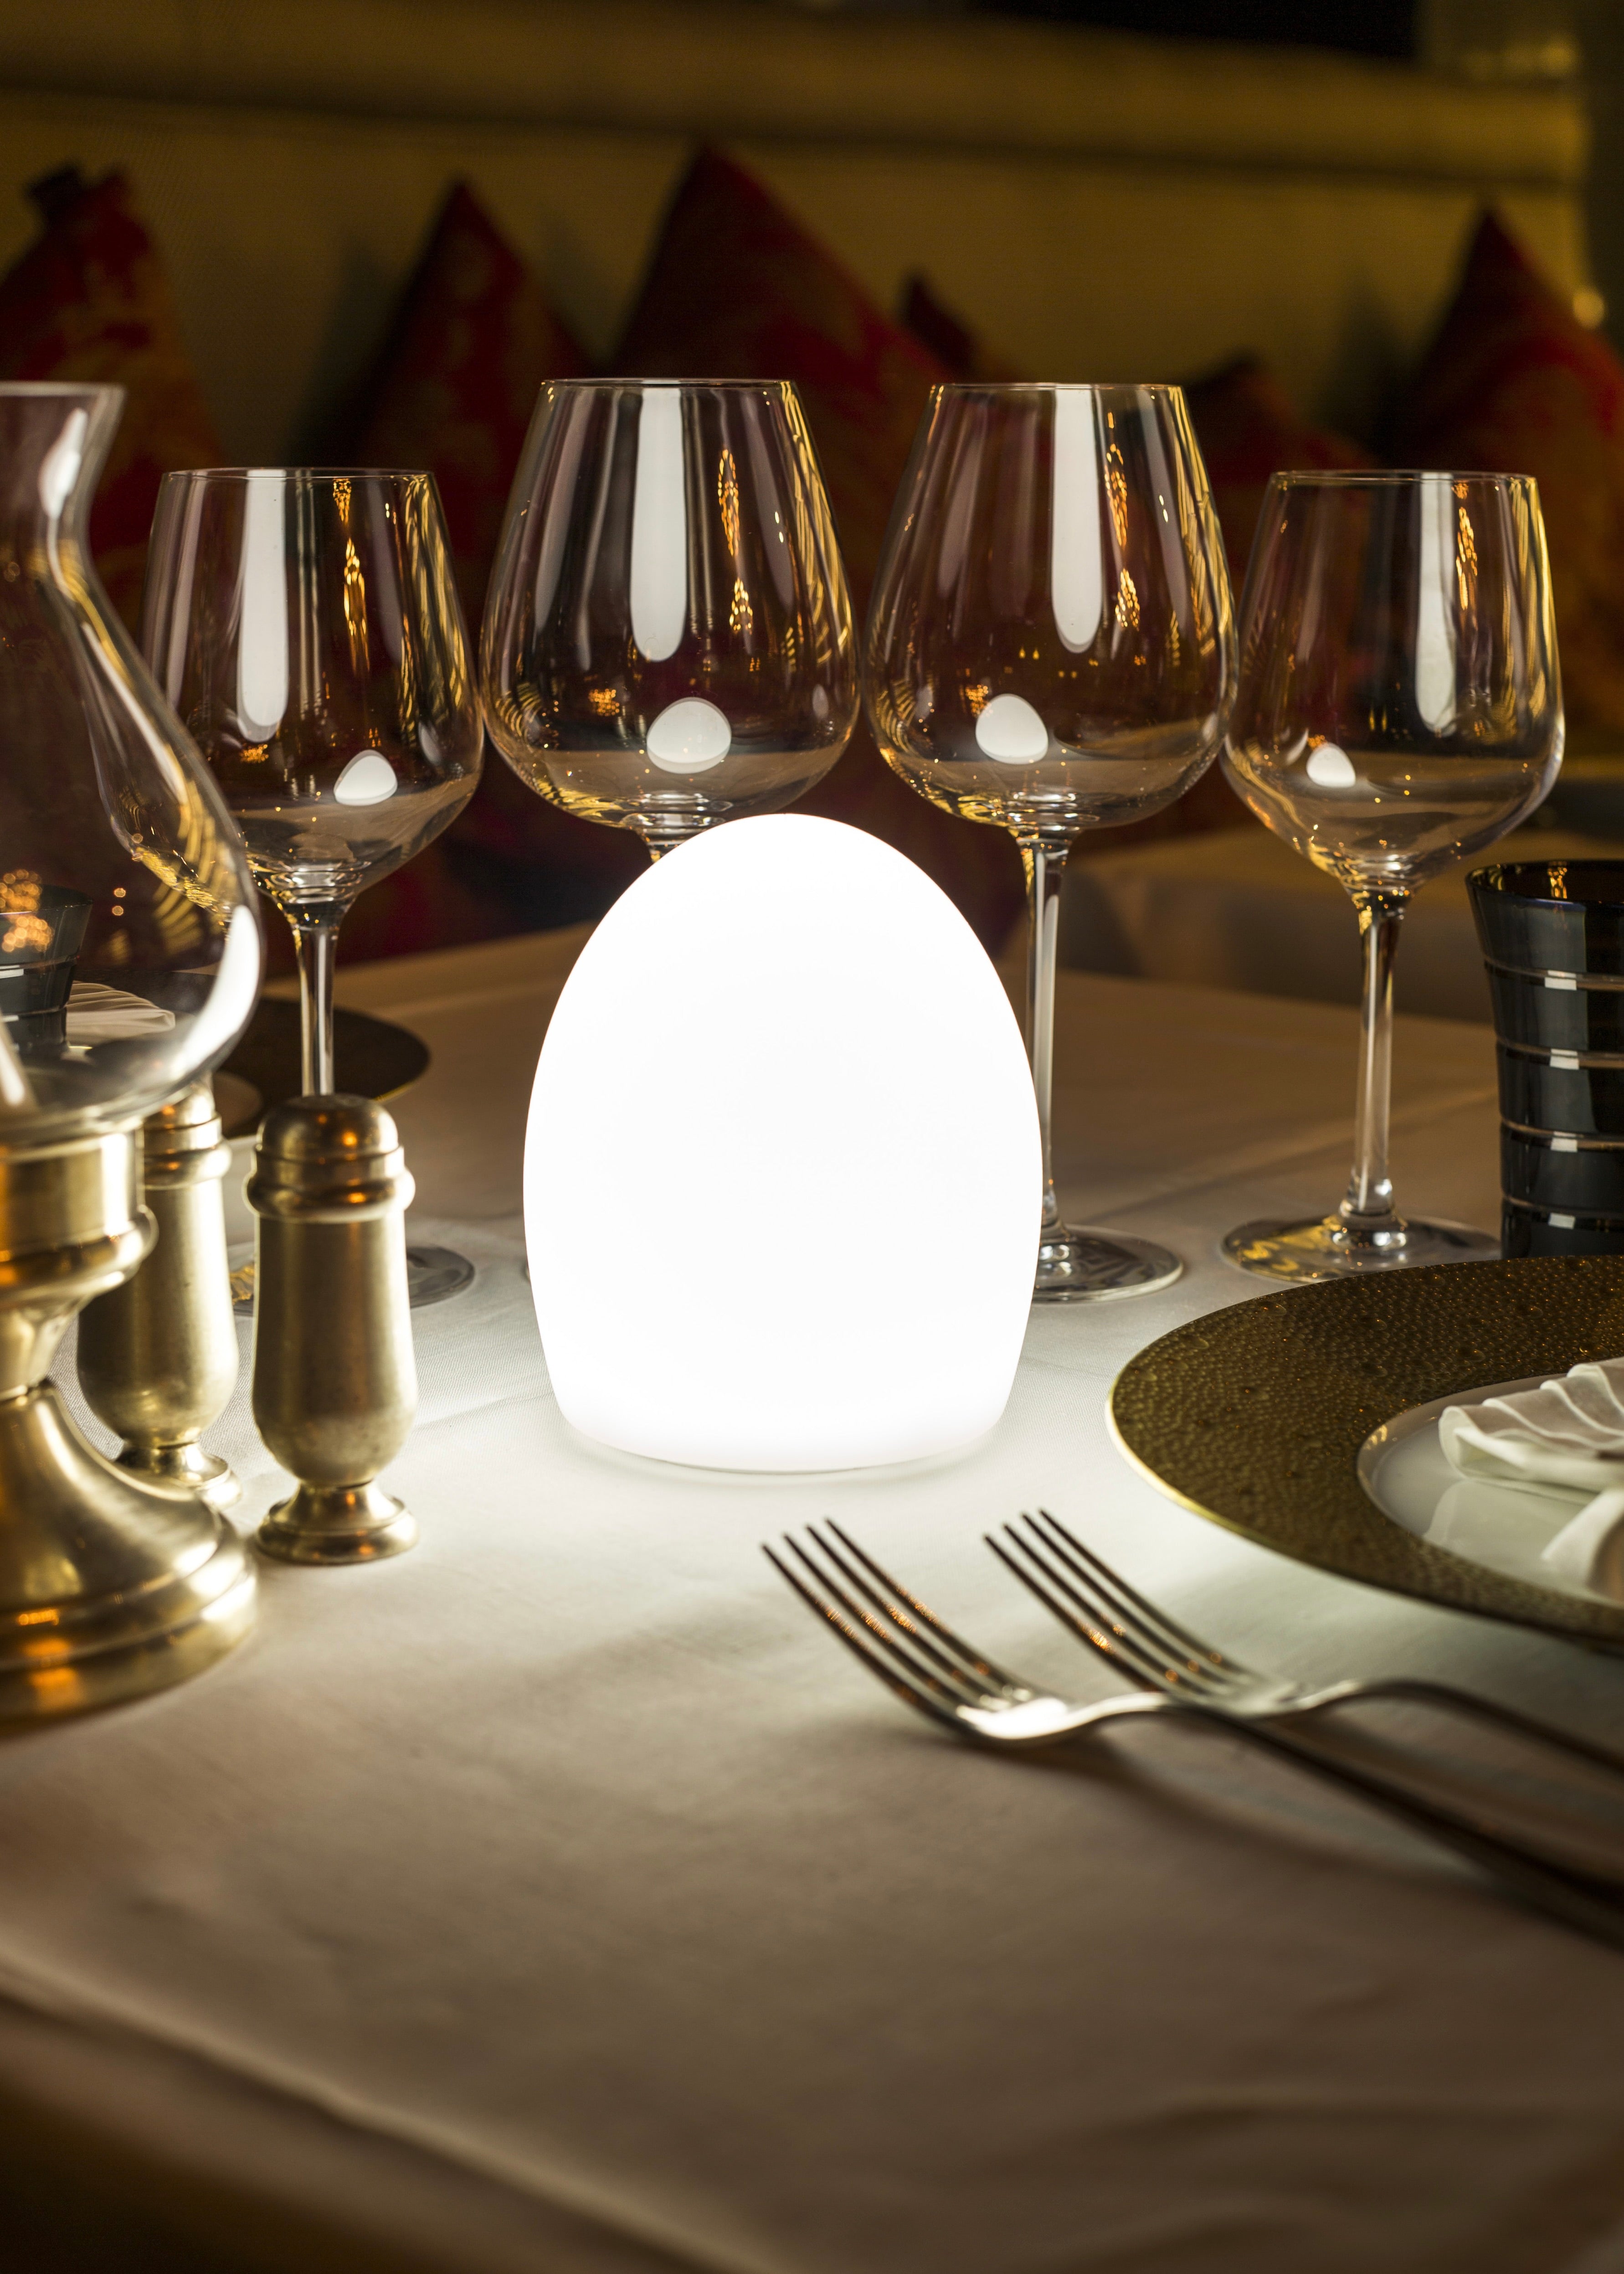 Lampe flottante - ZEN - Smart & Green - de table / en plastique